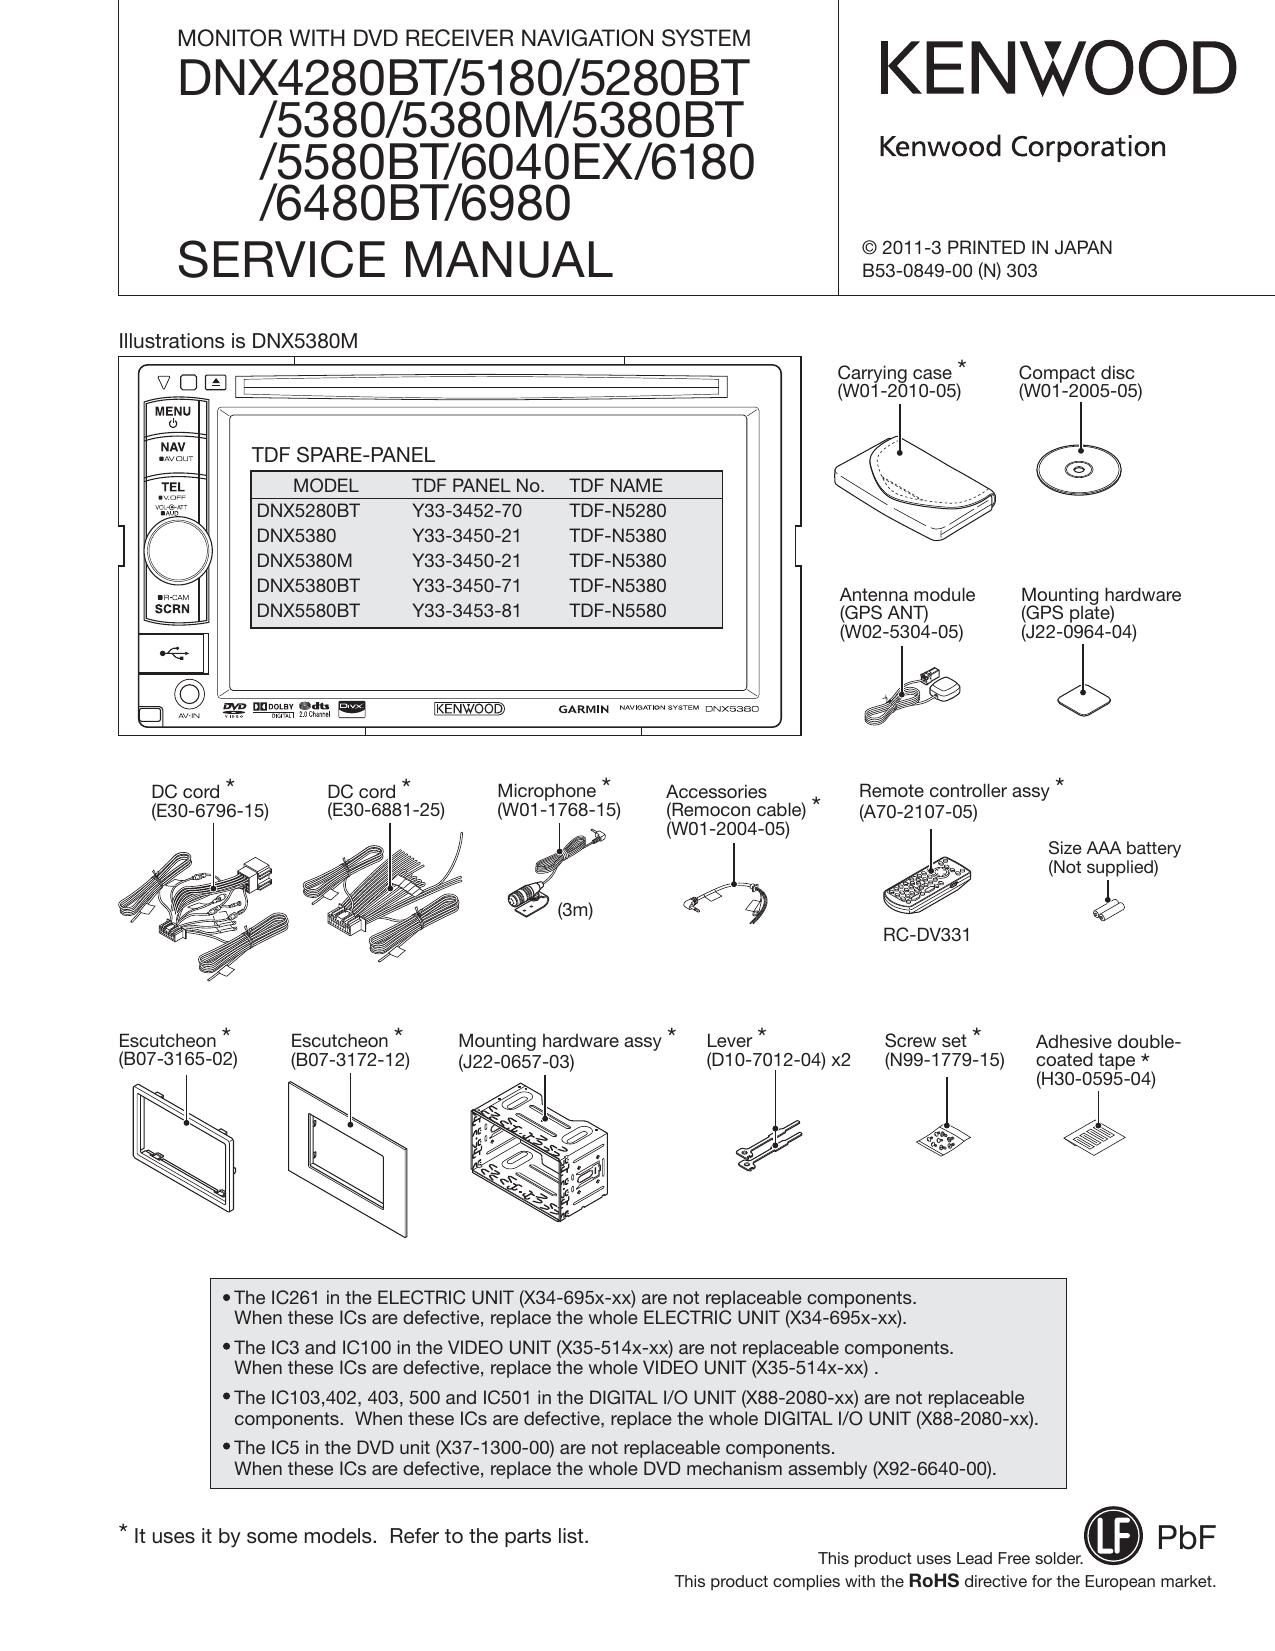 Kenwood DNX 4289 BT Service Manual